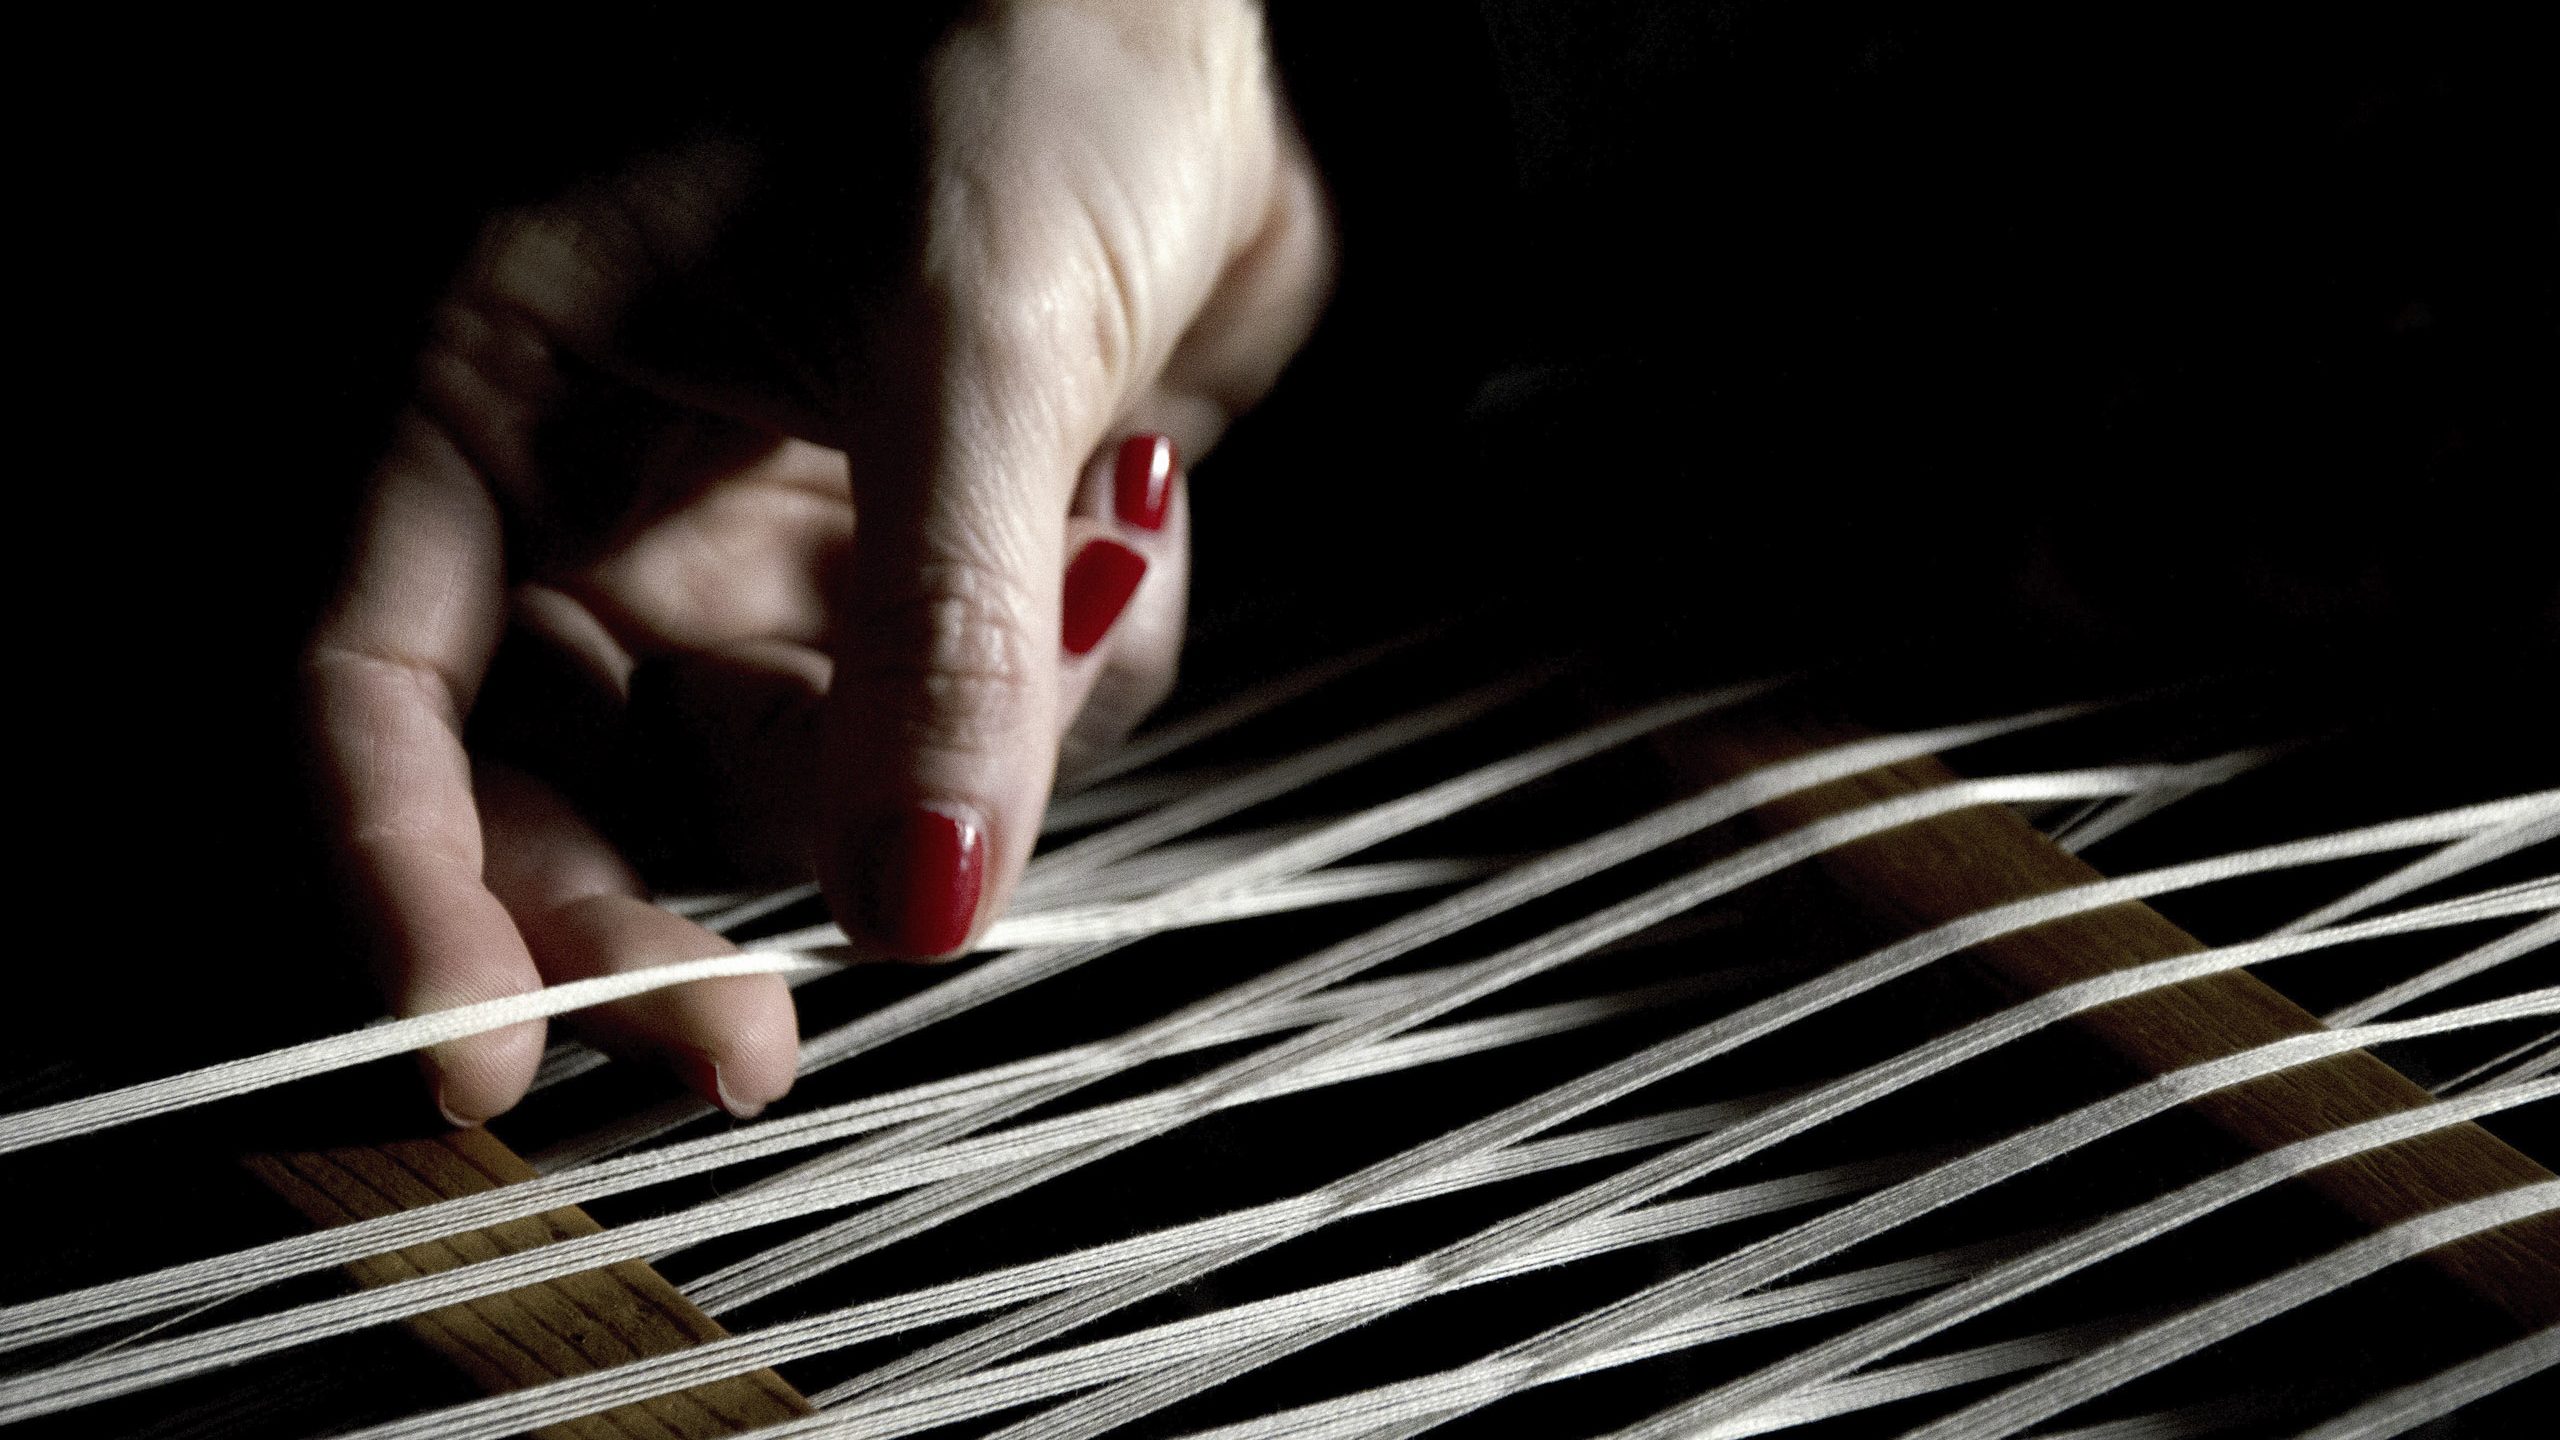 Artisan weaving workshop - Giuditta Brozzetti Museum Atelier  - Perugia, Umbria